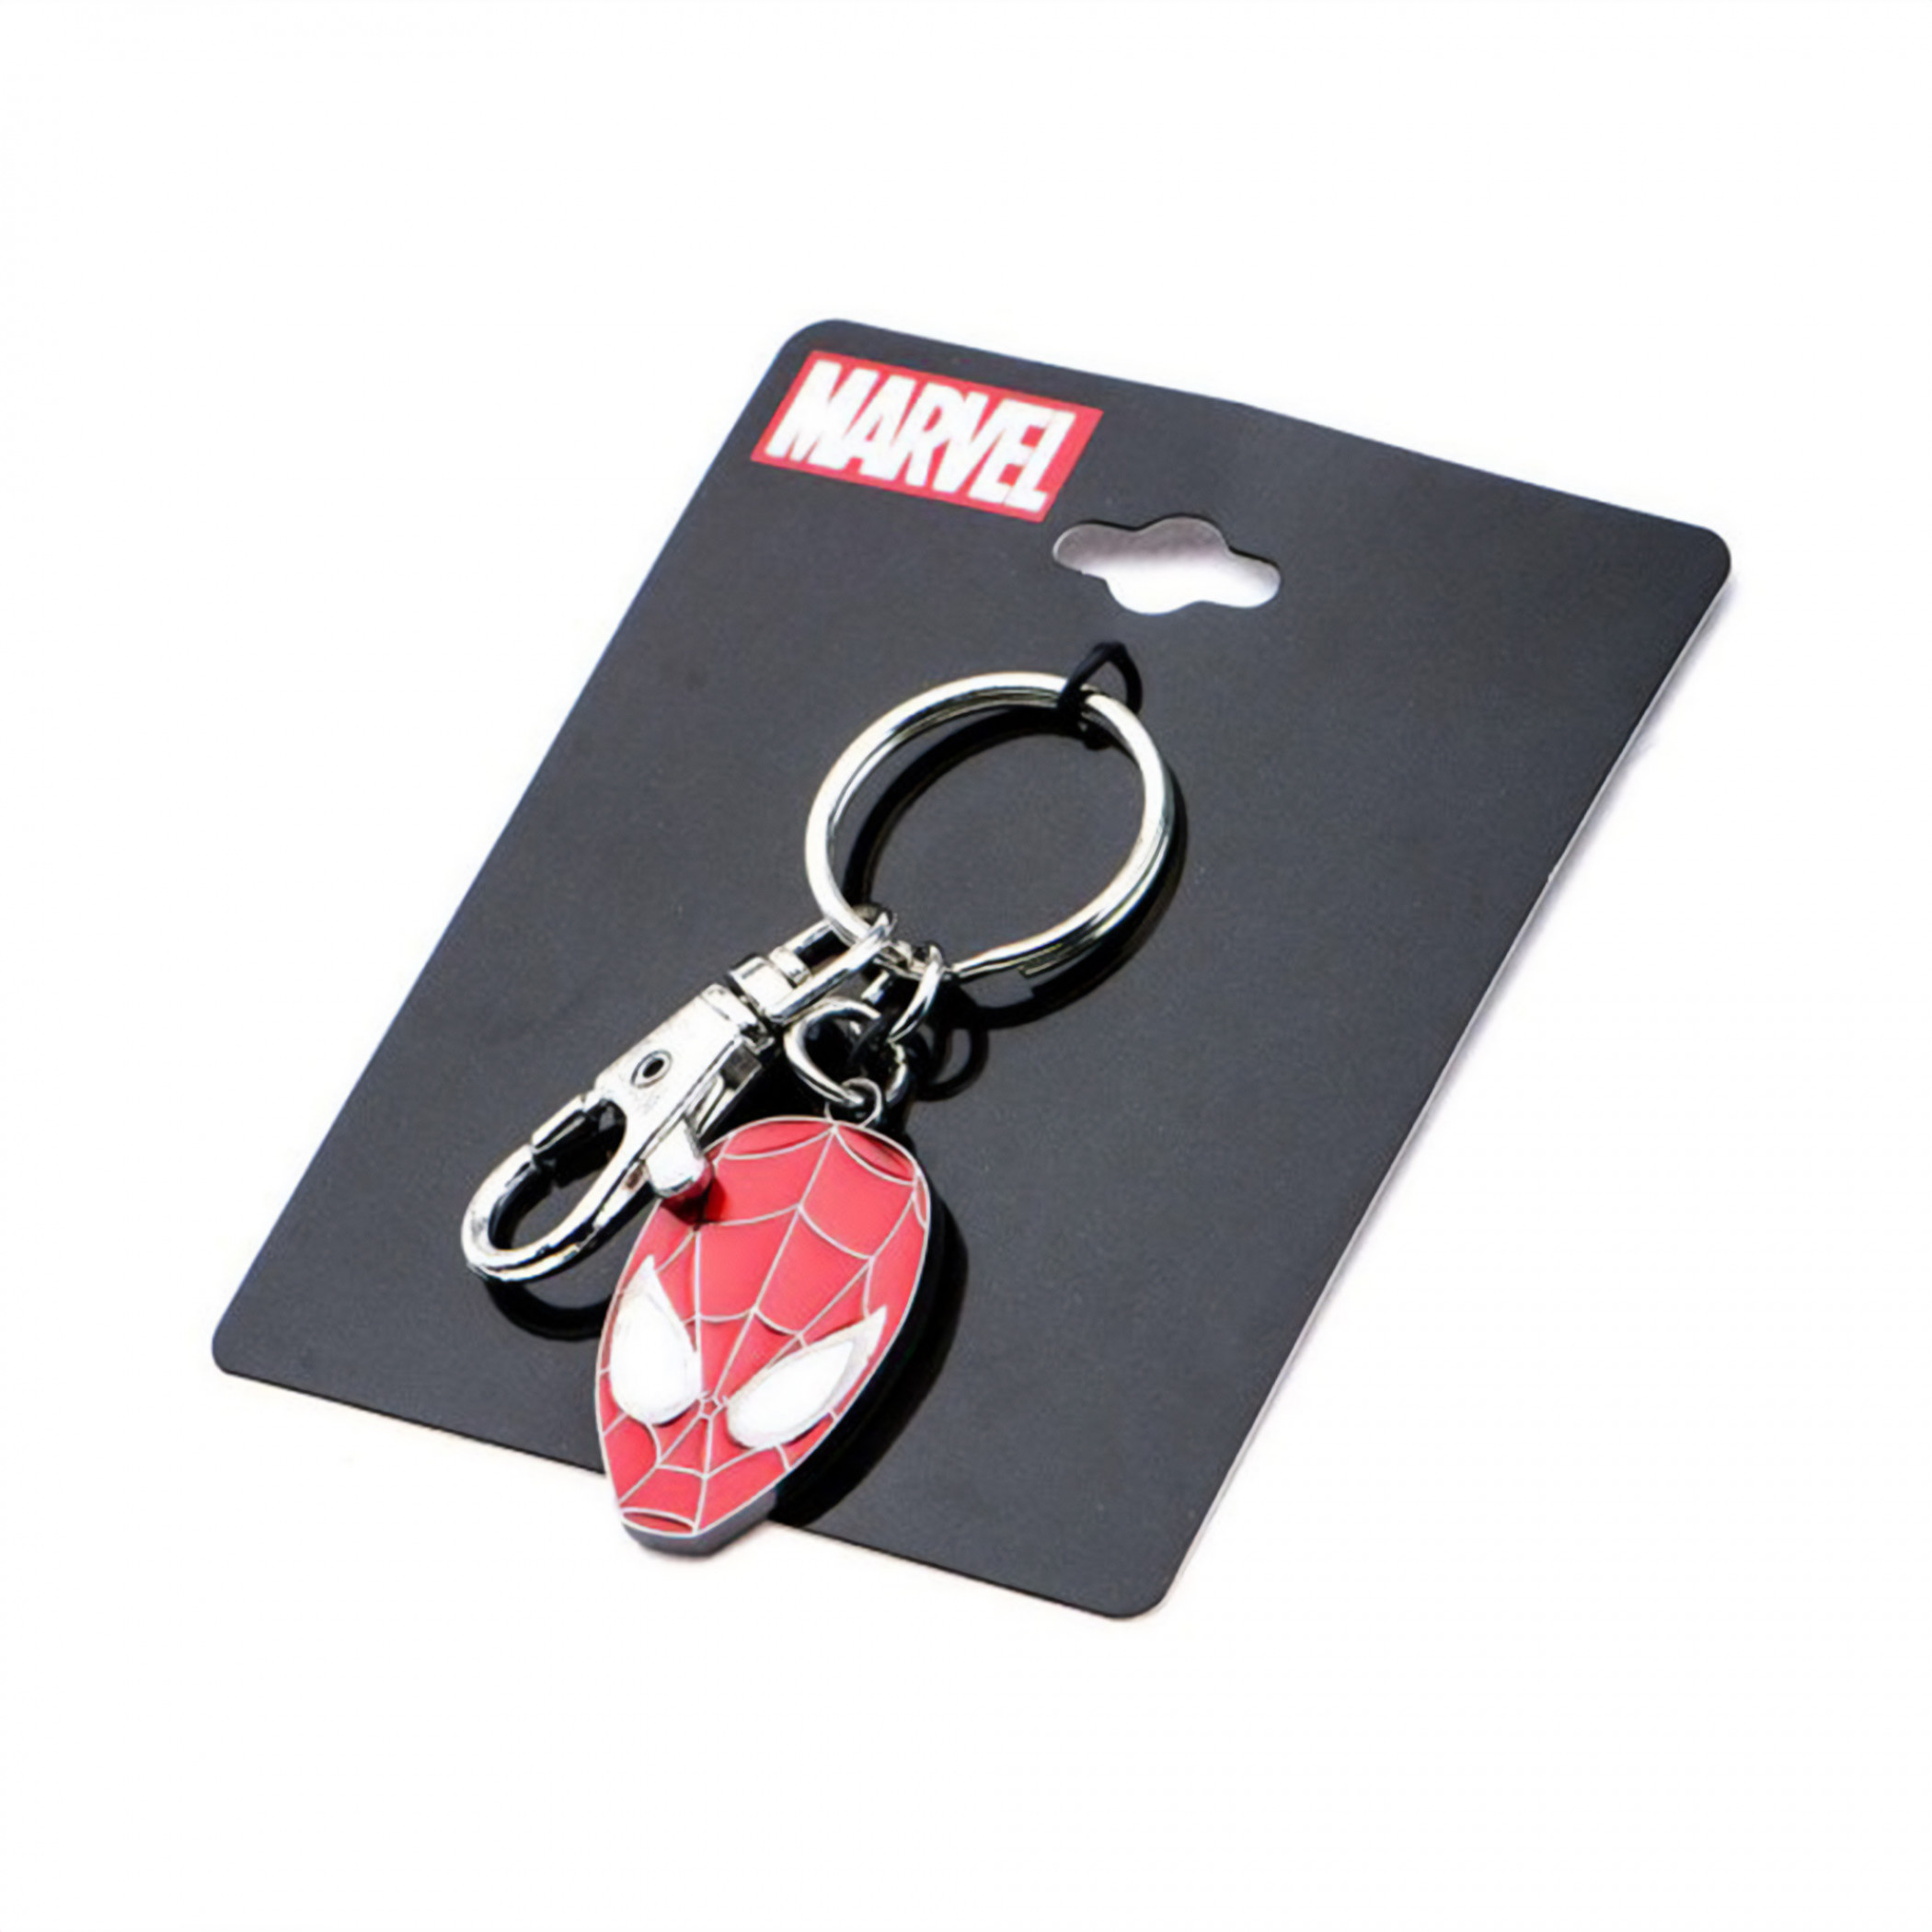 Marvel Comics Spider-Man Mask Keychain